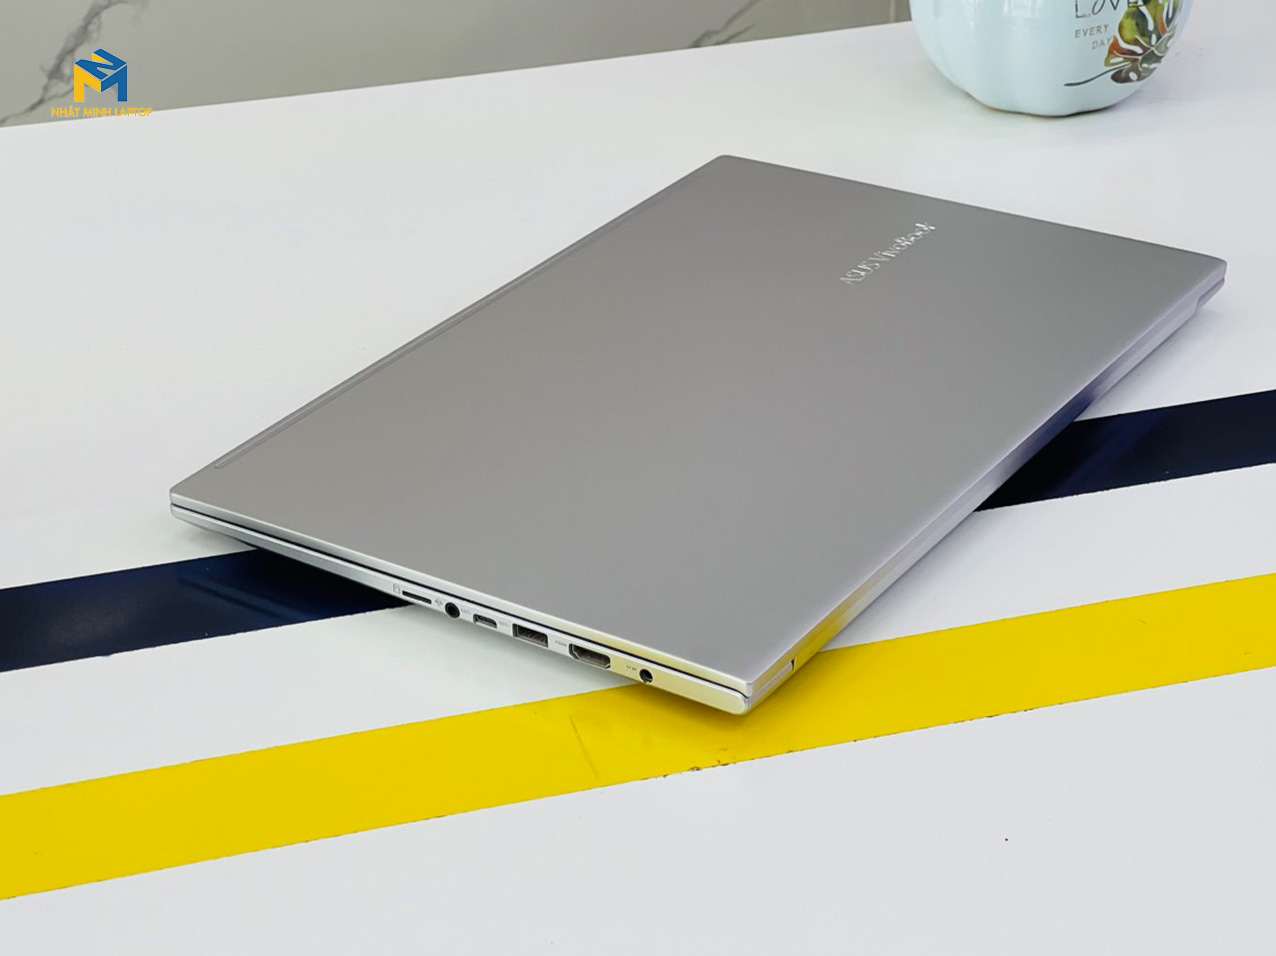 Asus Vivobook A515E (2021) i5-1135G7 8GB 512GB Nvidia MX33015.6" FHD 